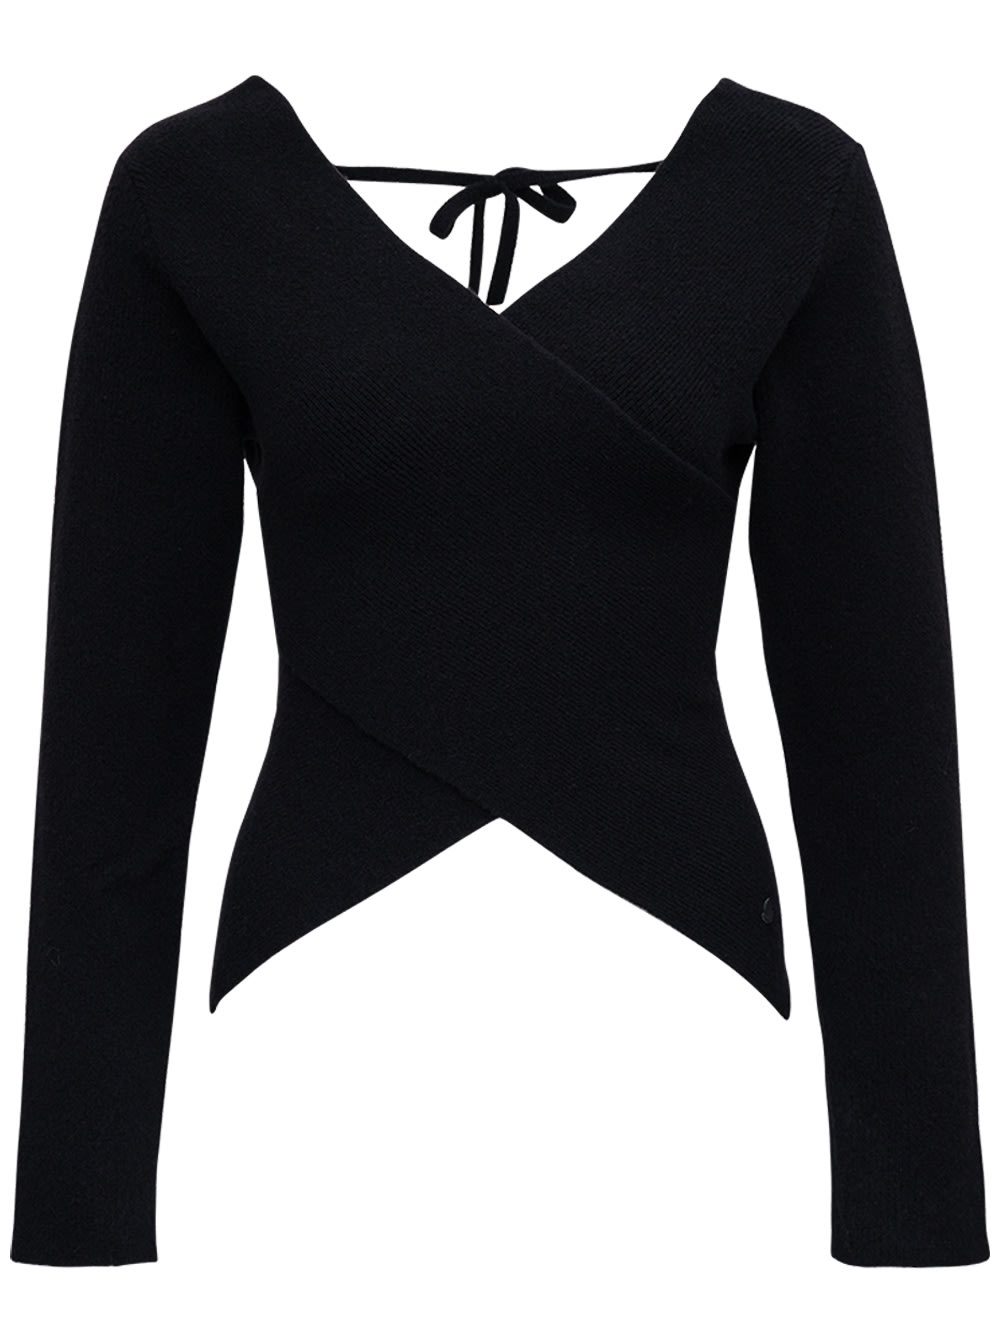 Moncler Genius Black Wrap Sweater By 1952